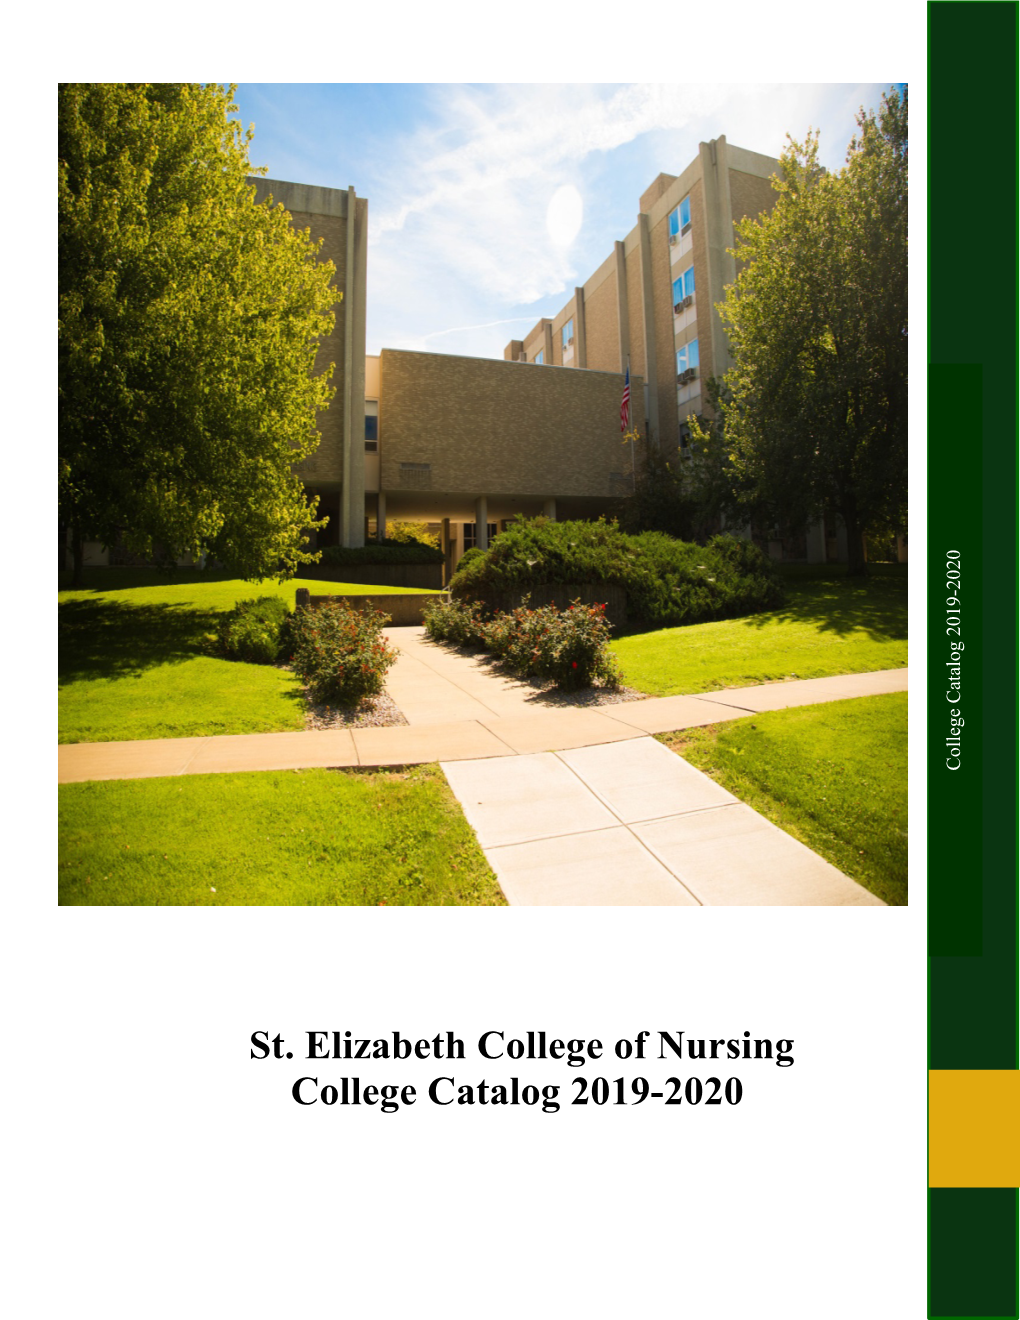 St. Elizabeth College of Nursing College Catalog 2019-2020